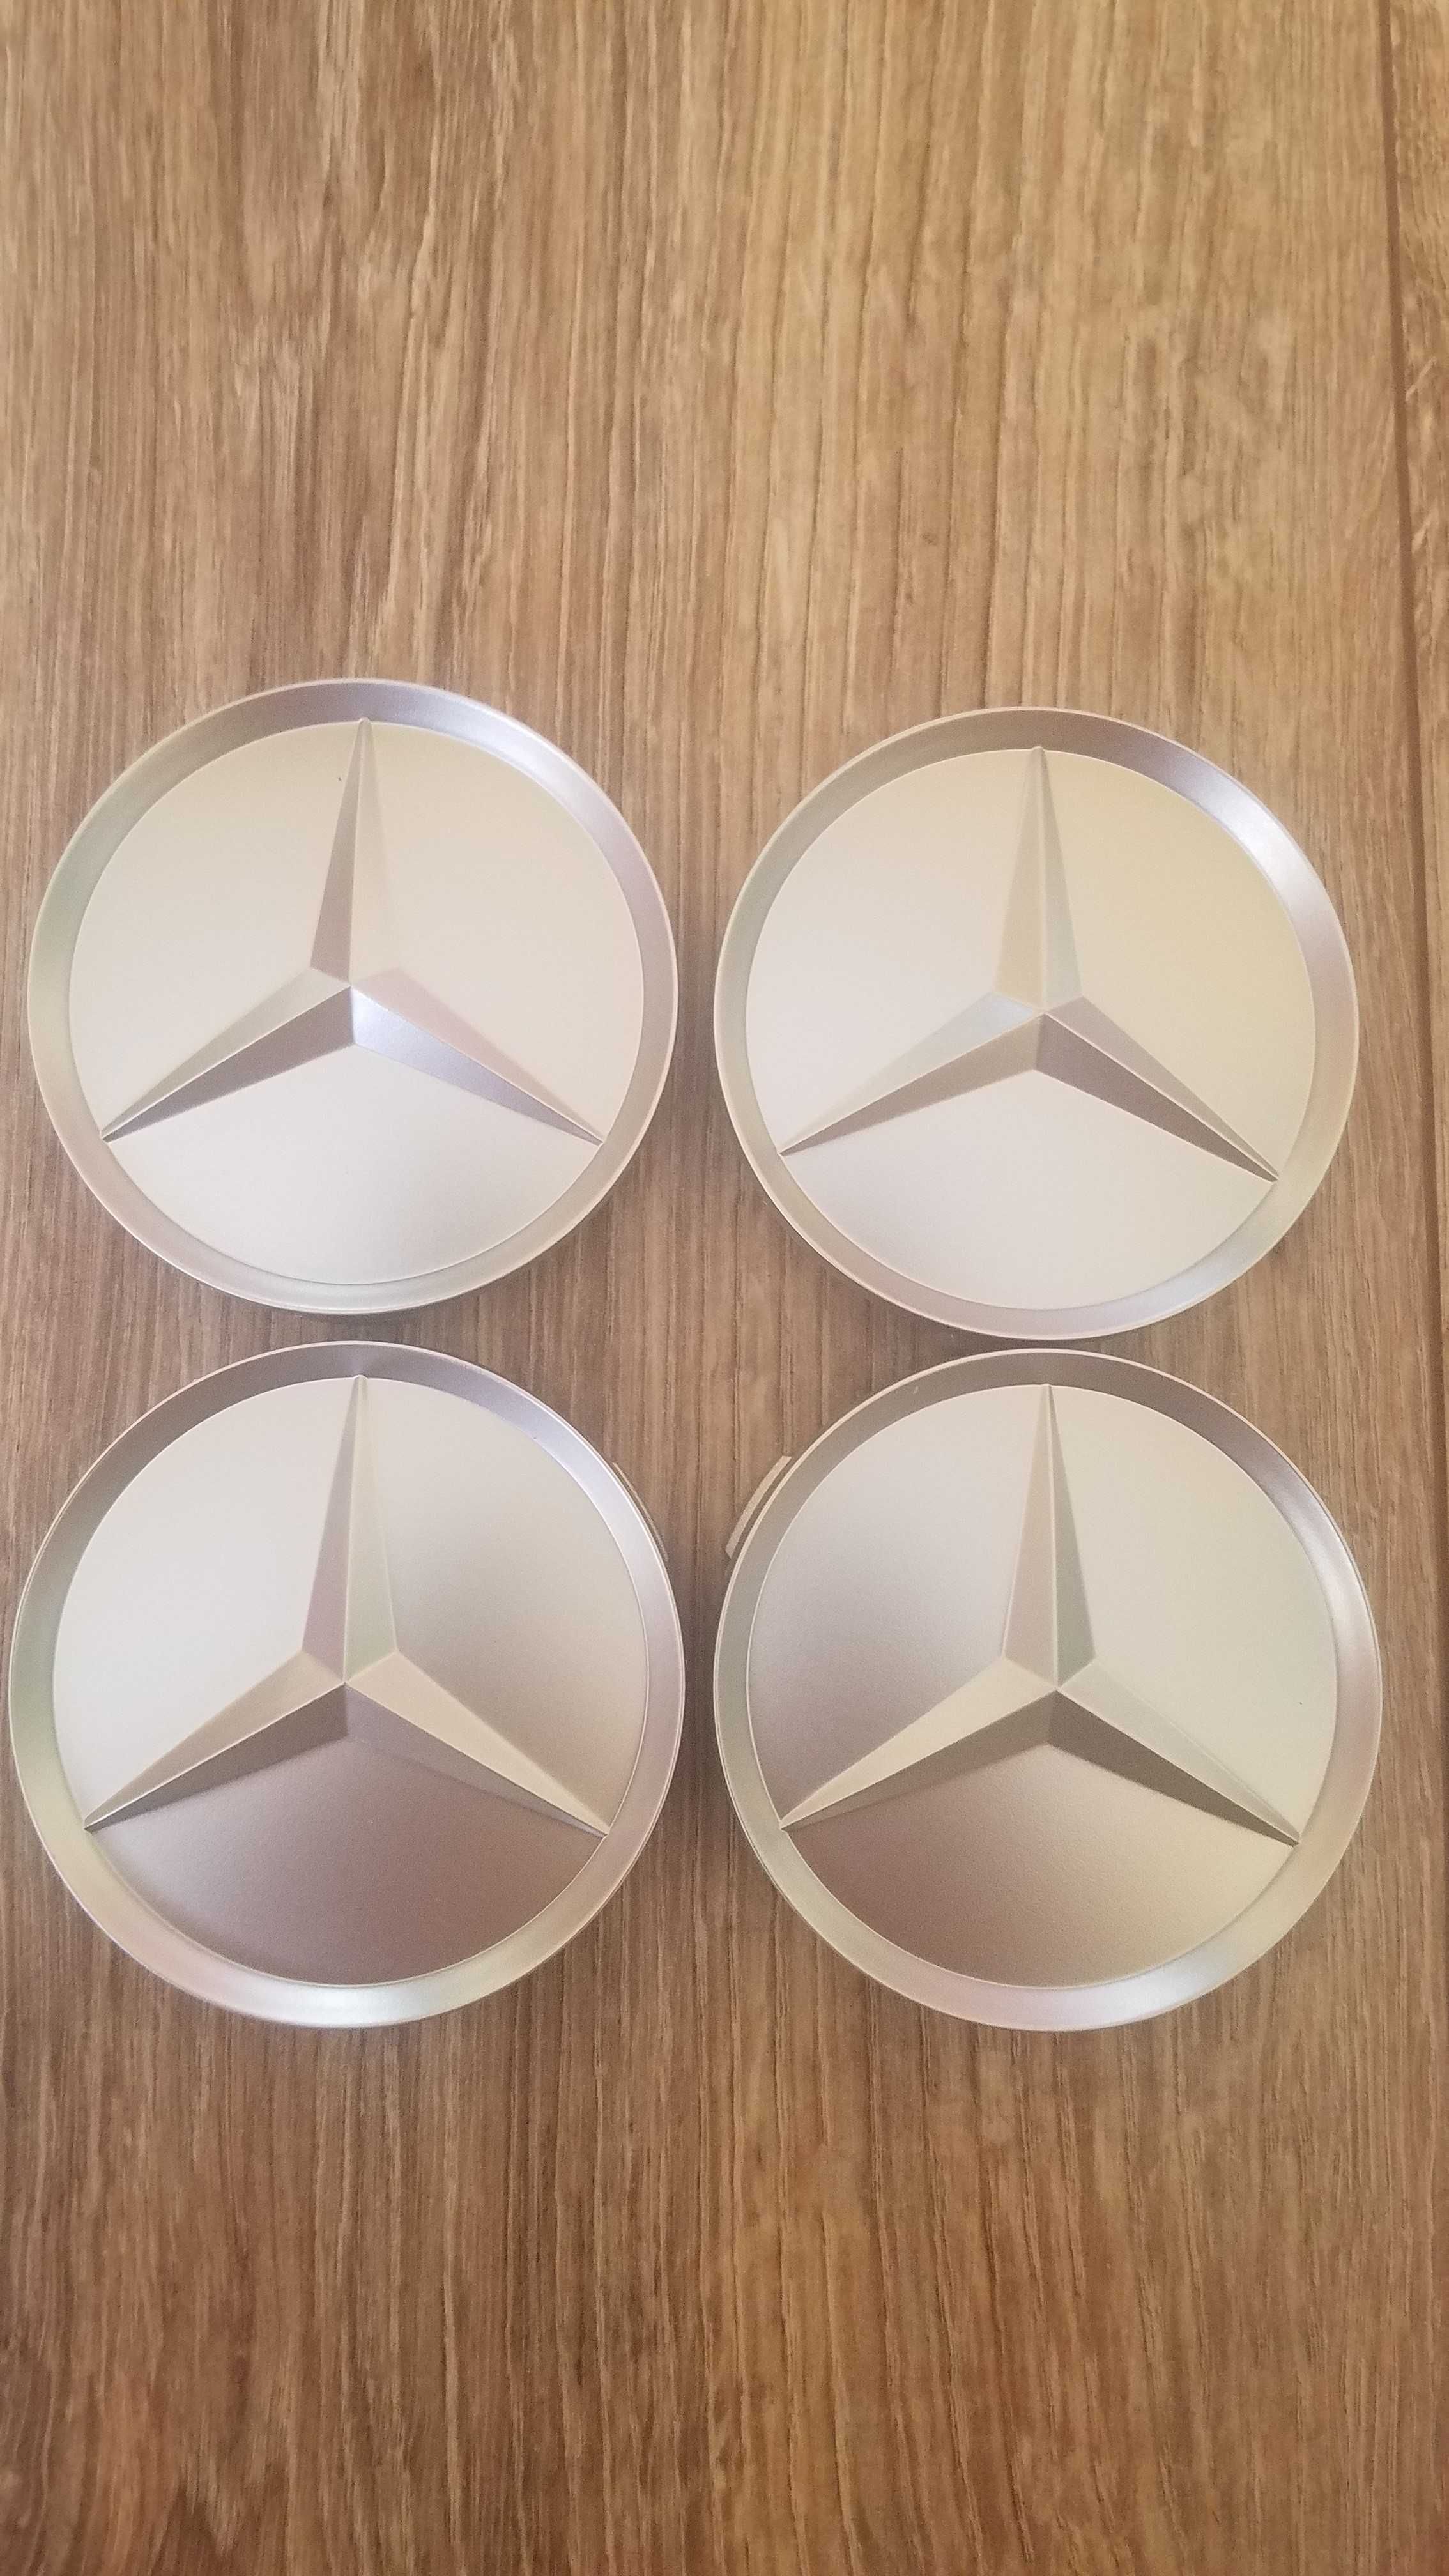 Dekielki Znaczki Mercedes AMG i gwiazdy kapsle felg emblemat 75mm 4szt